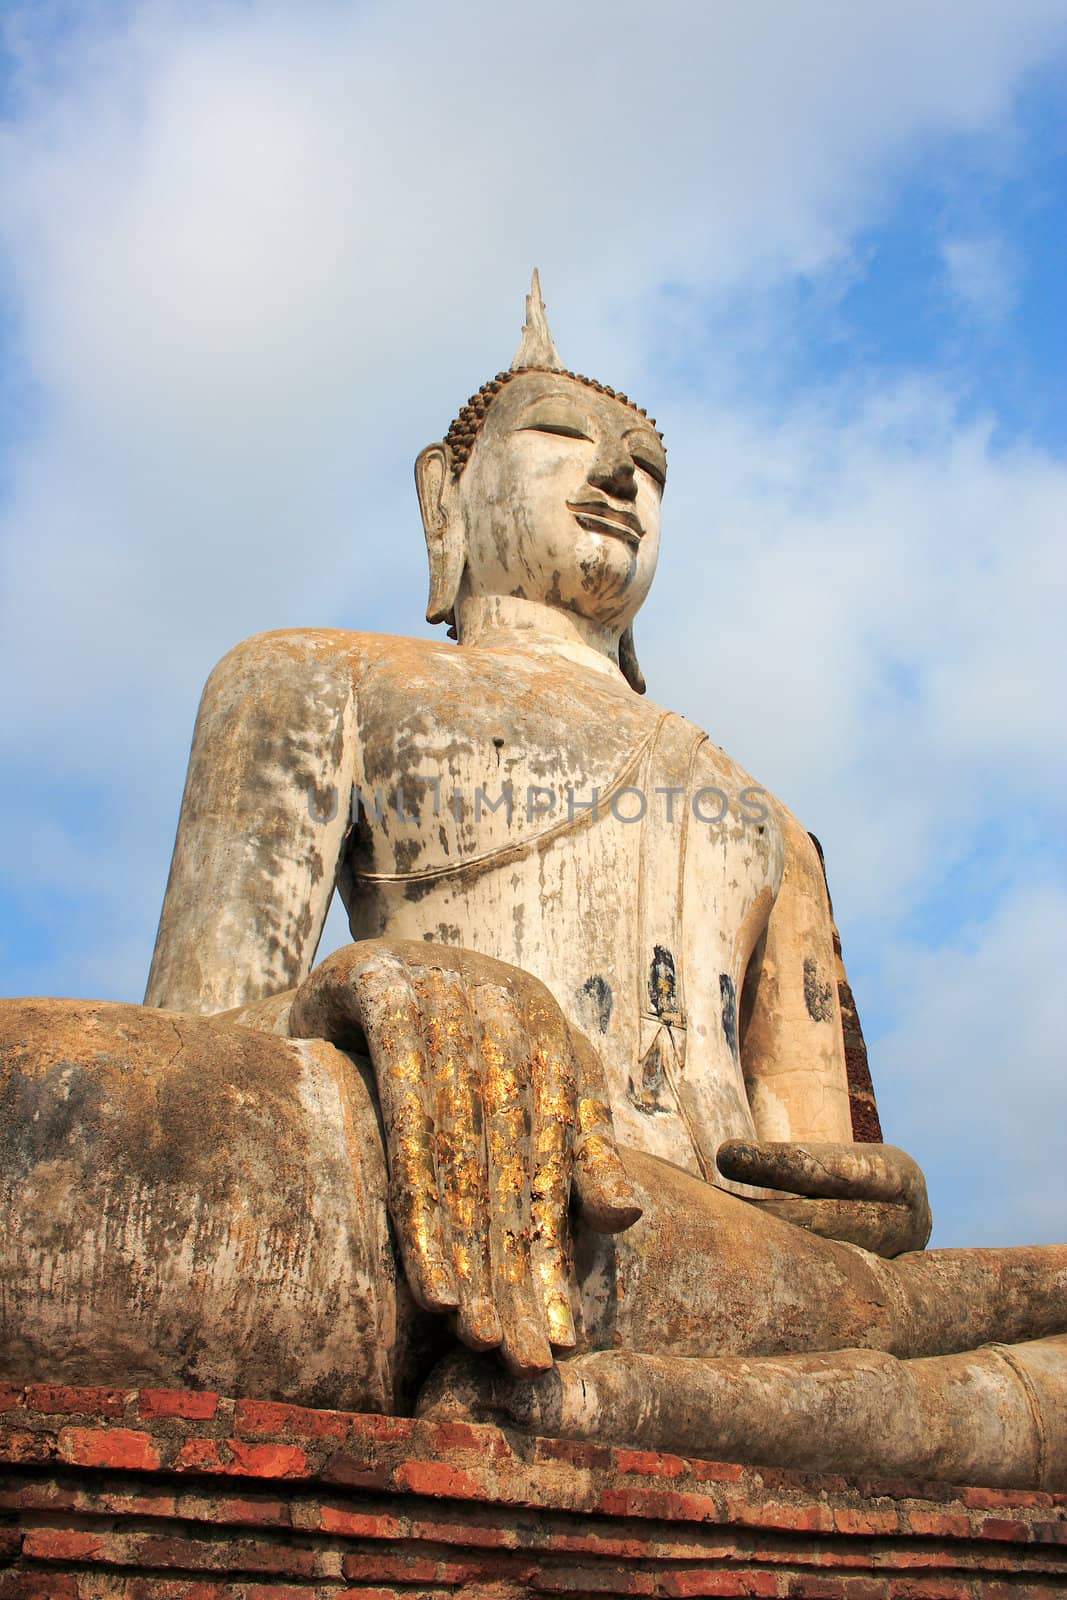 Old Siam Buddha of Sukhothai, Thailand (UNESCO word heritage)